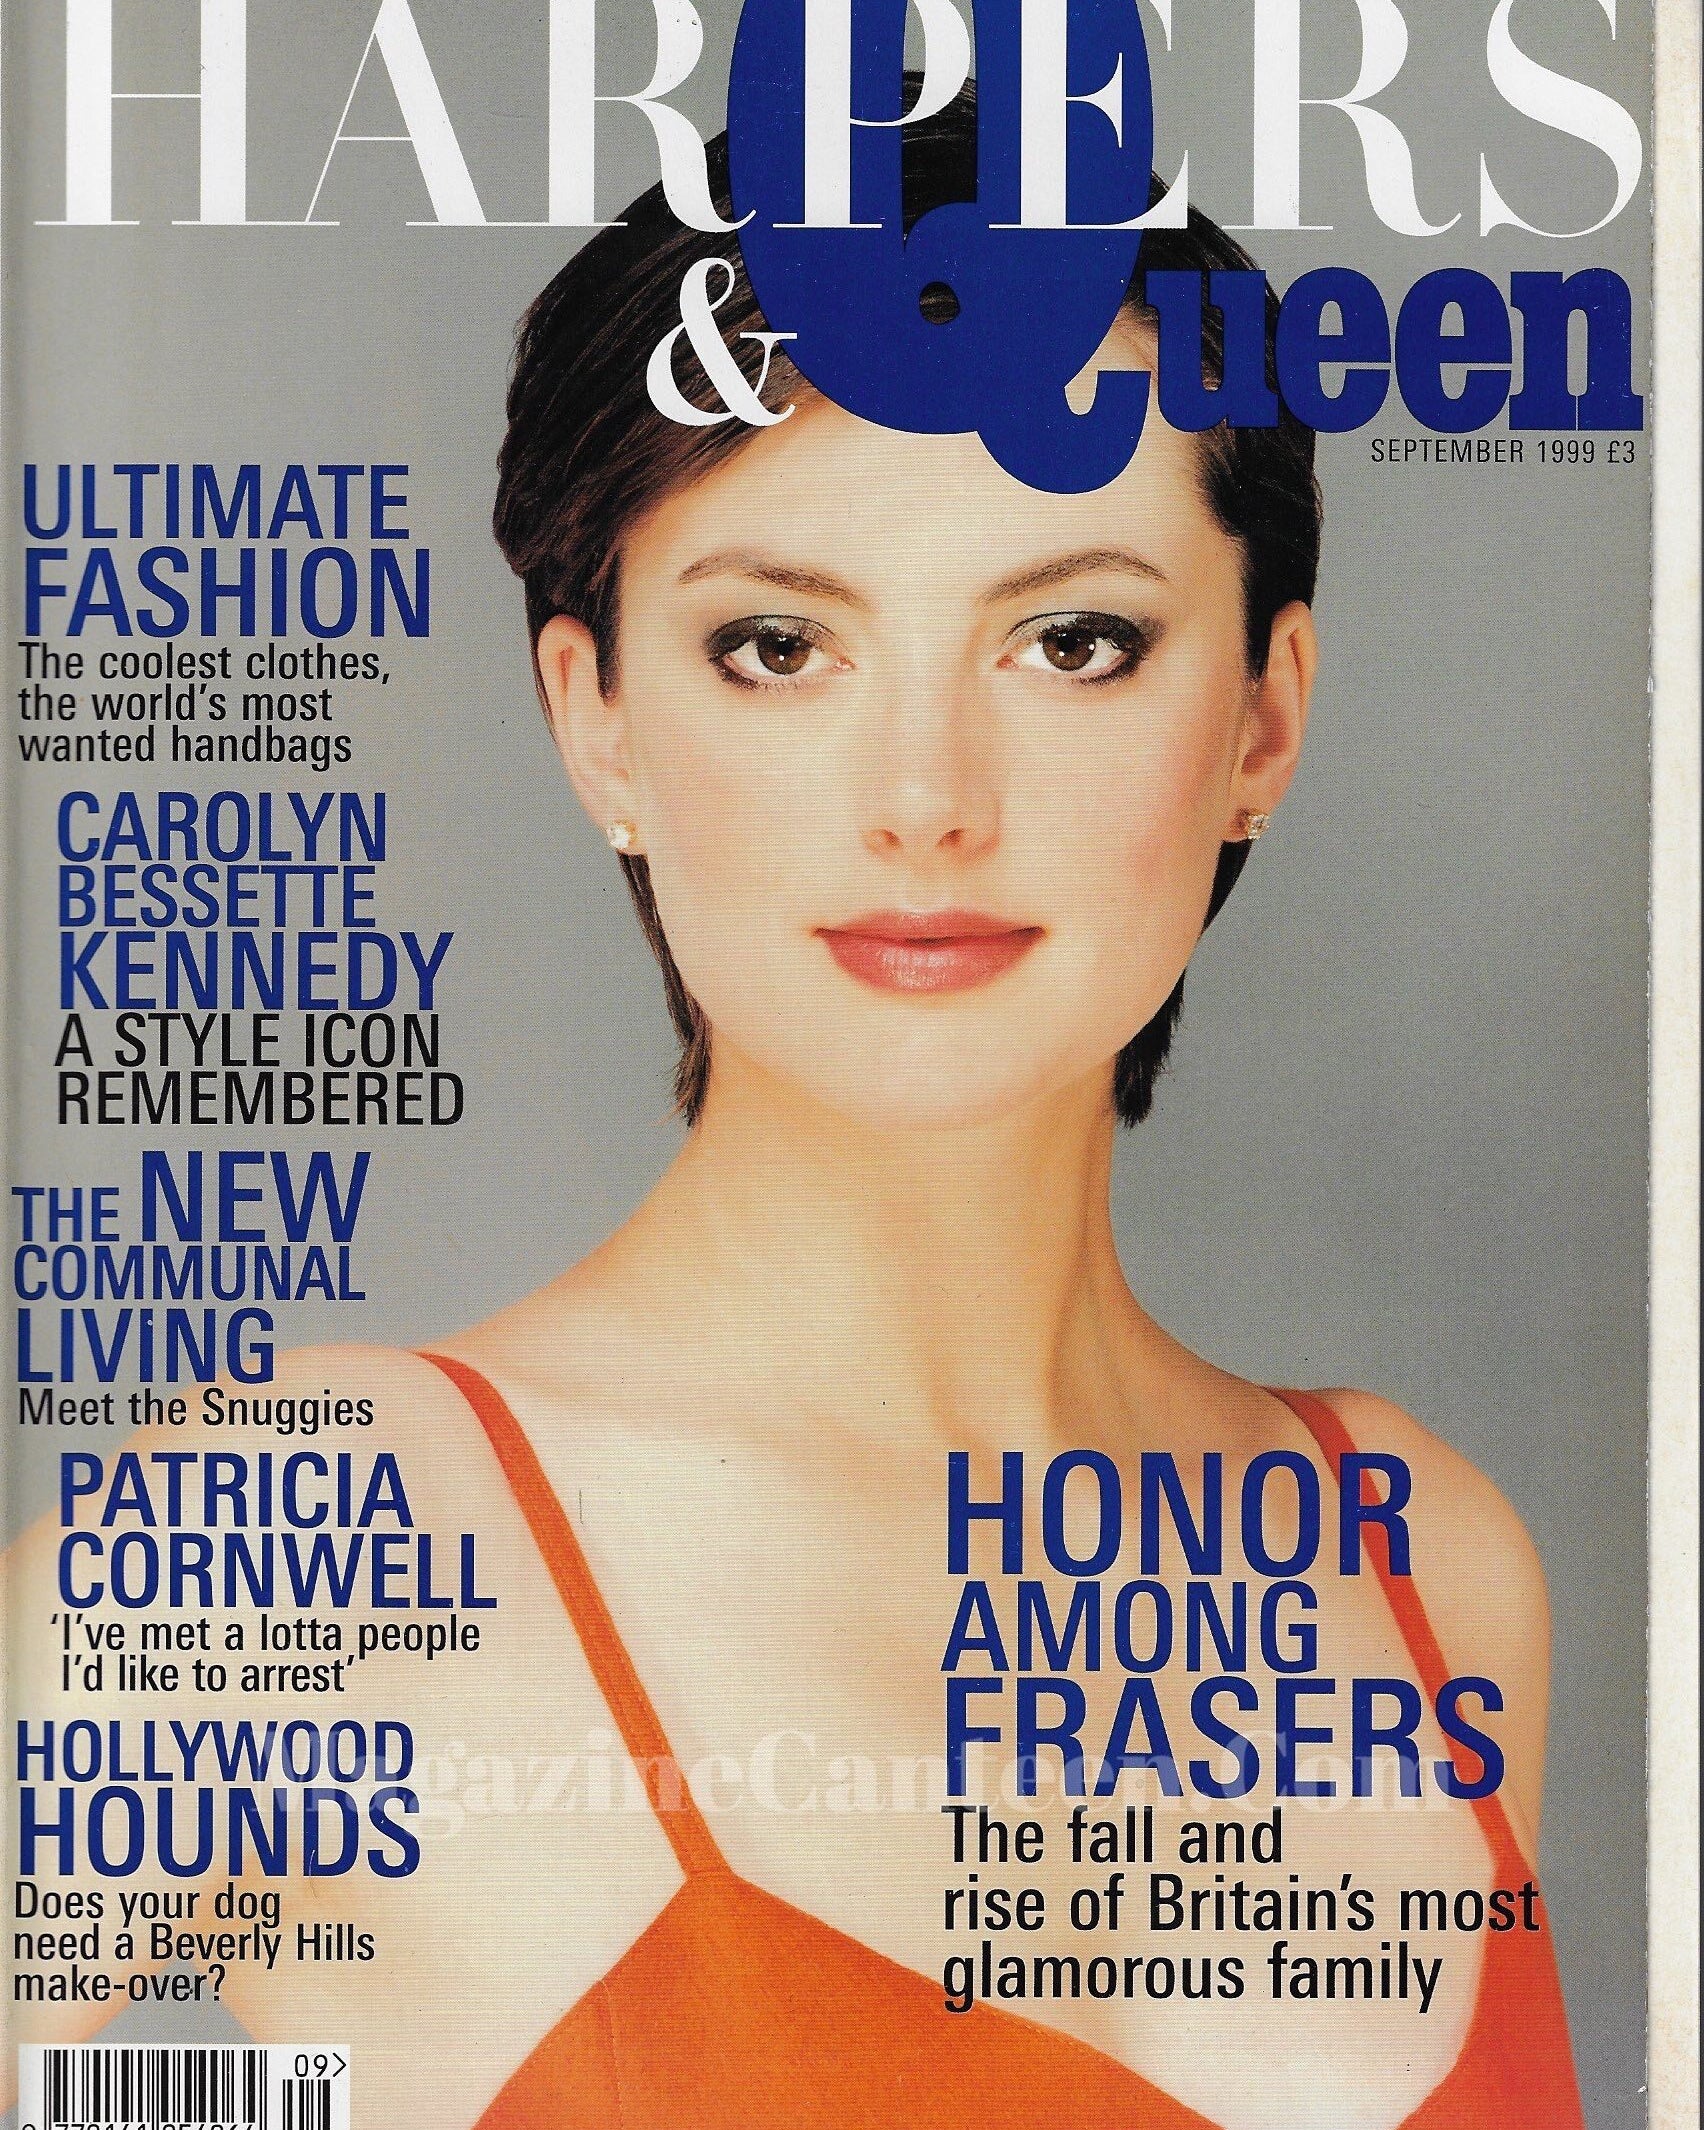 Harpers & Queen Magazine - Honor Fraser